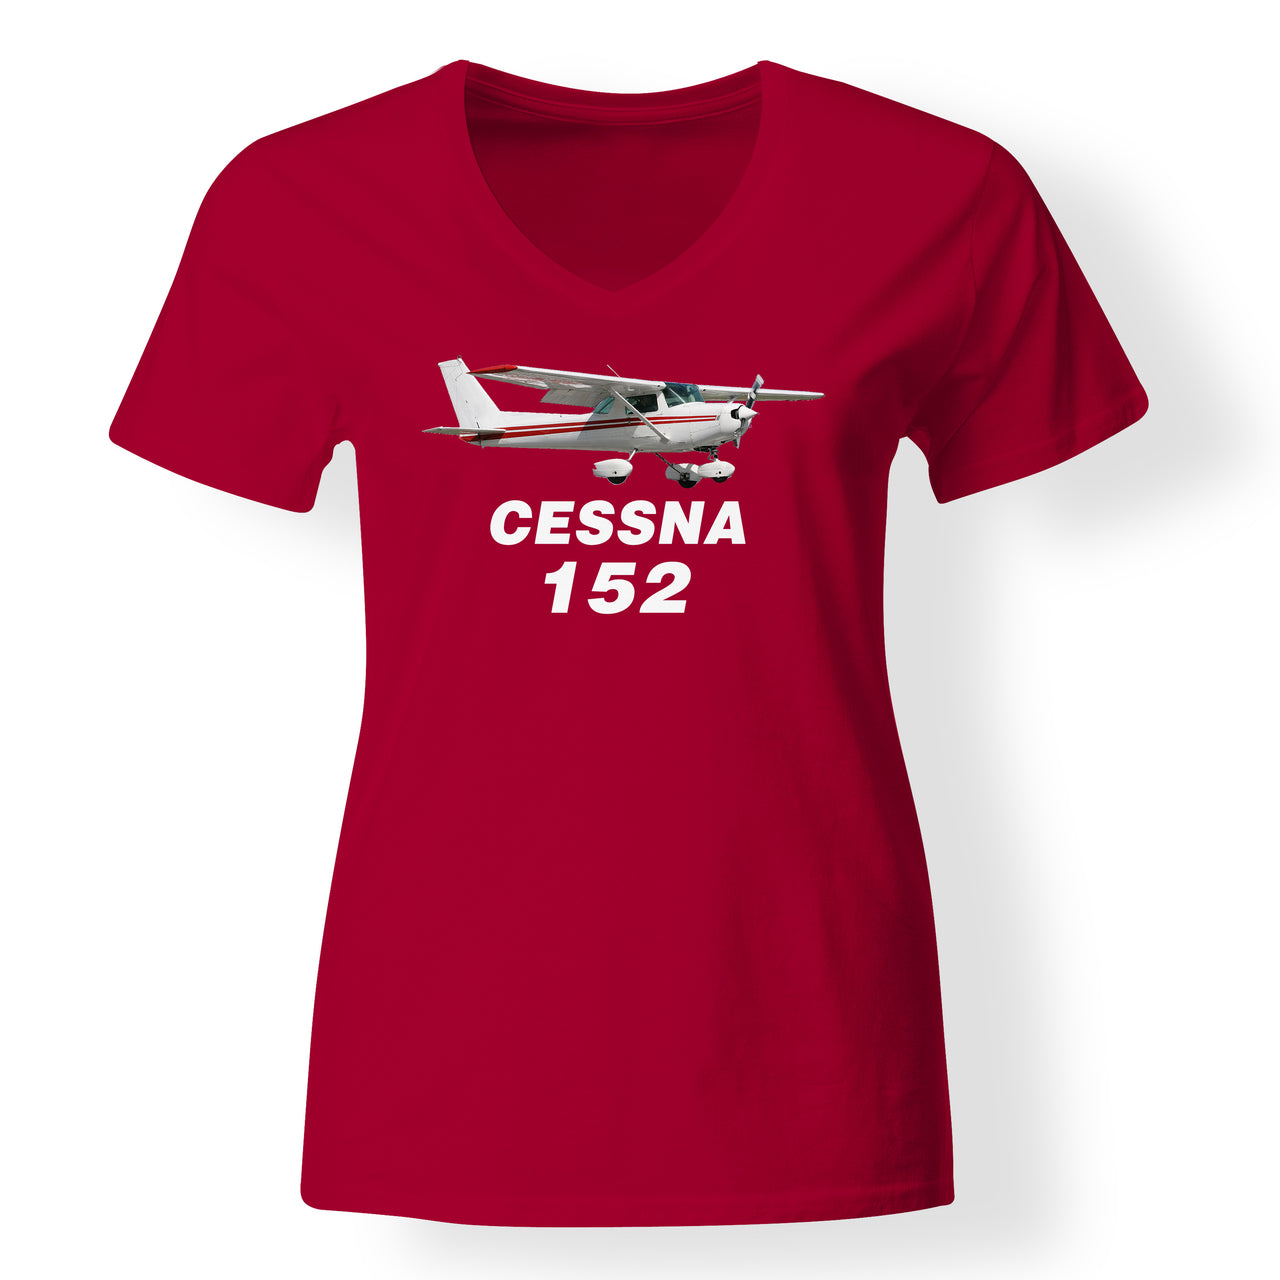 The Cessna 152 Designed V-Neck T-Shirts